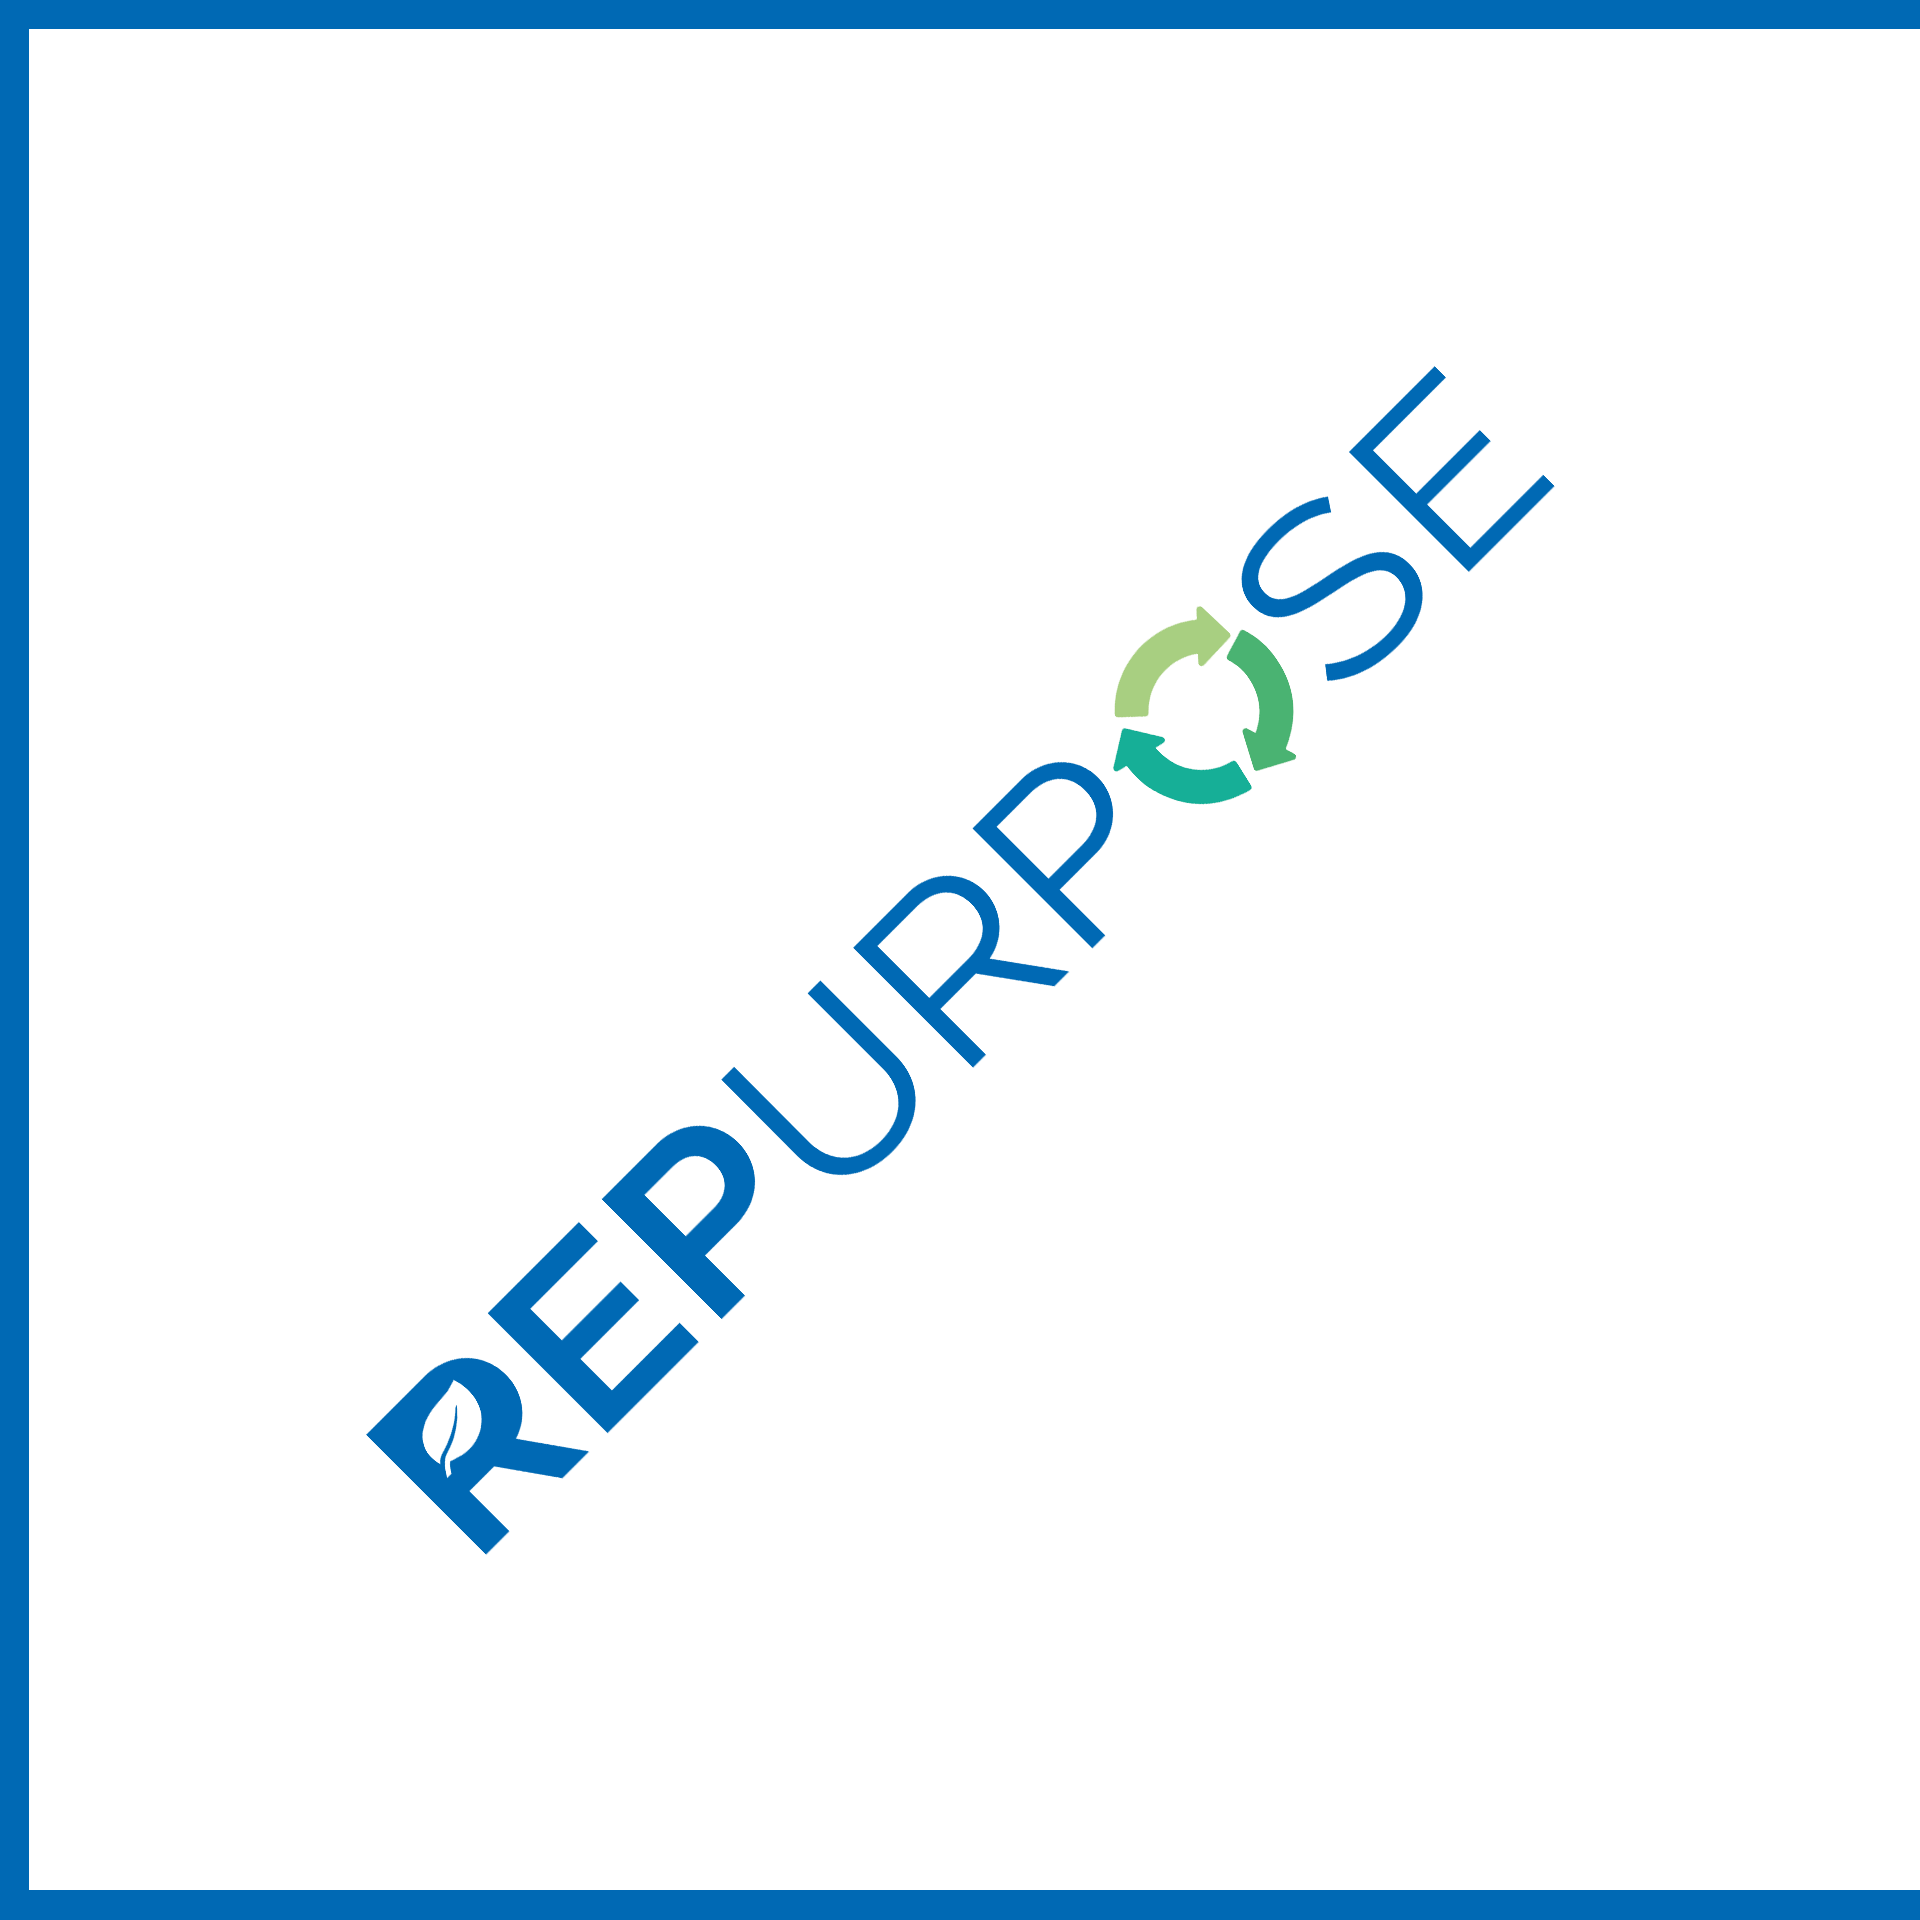 REPurpose